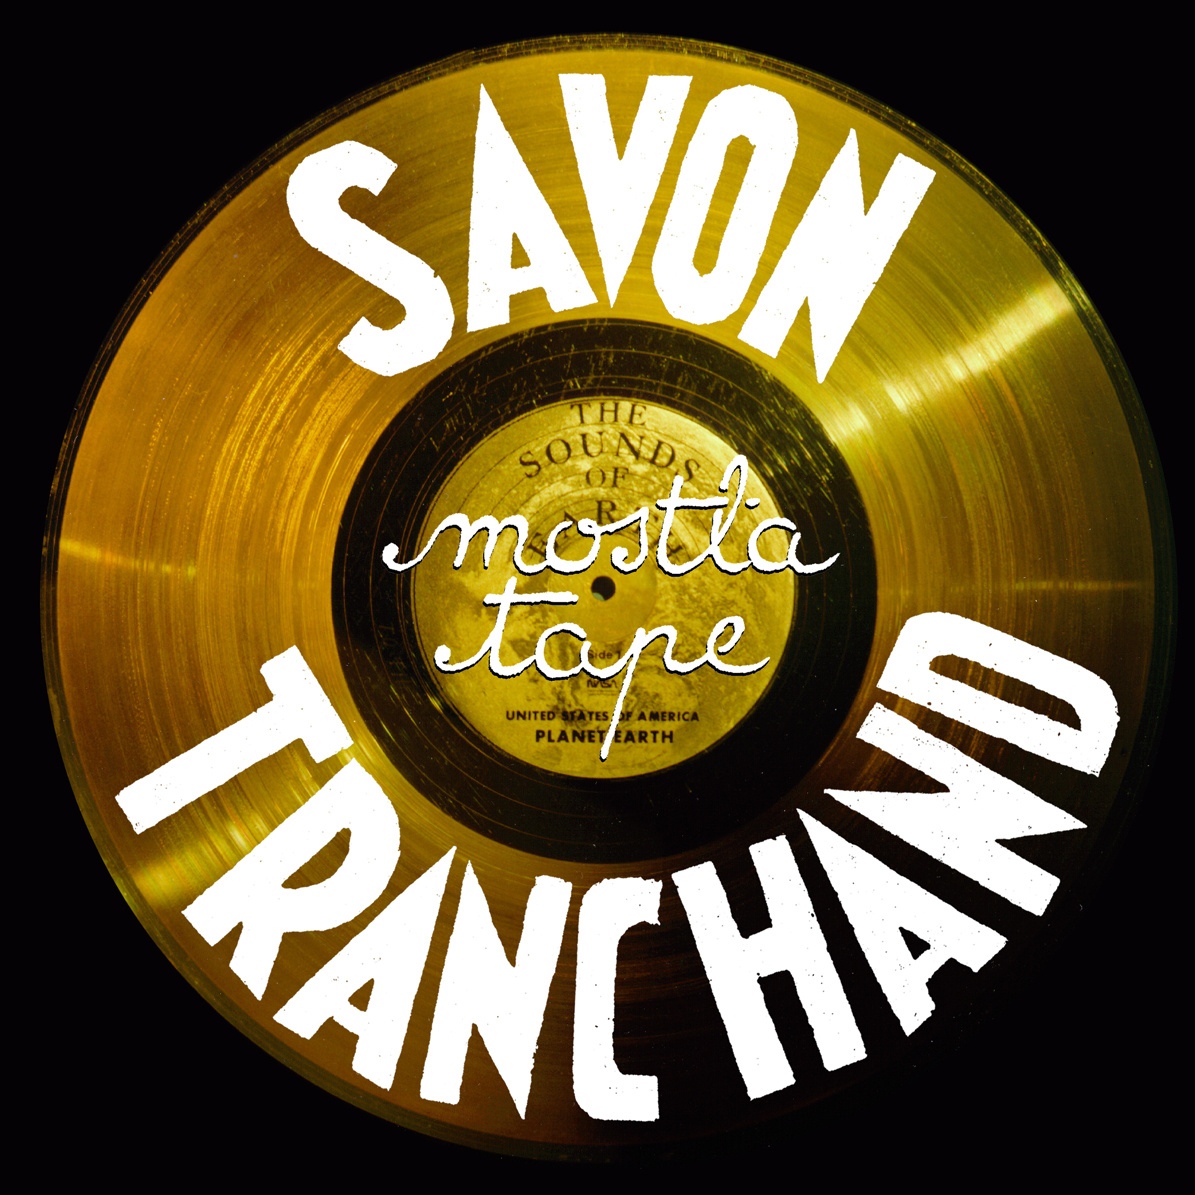 Savon Tranchand - Mostla Tape